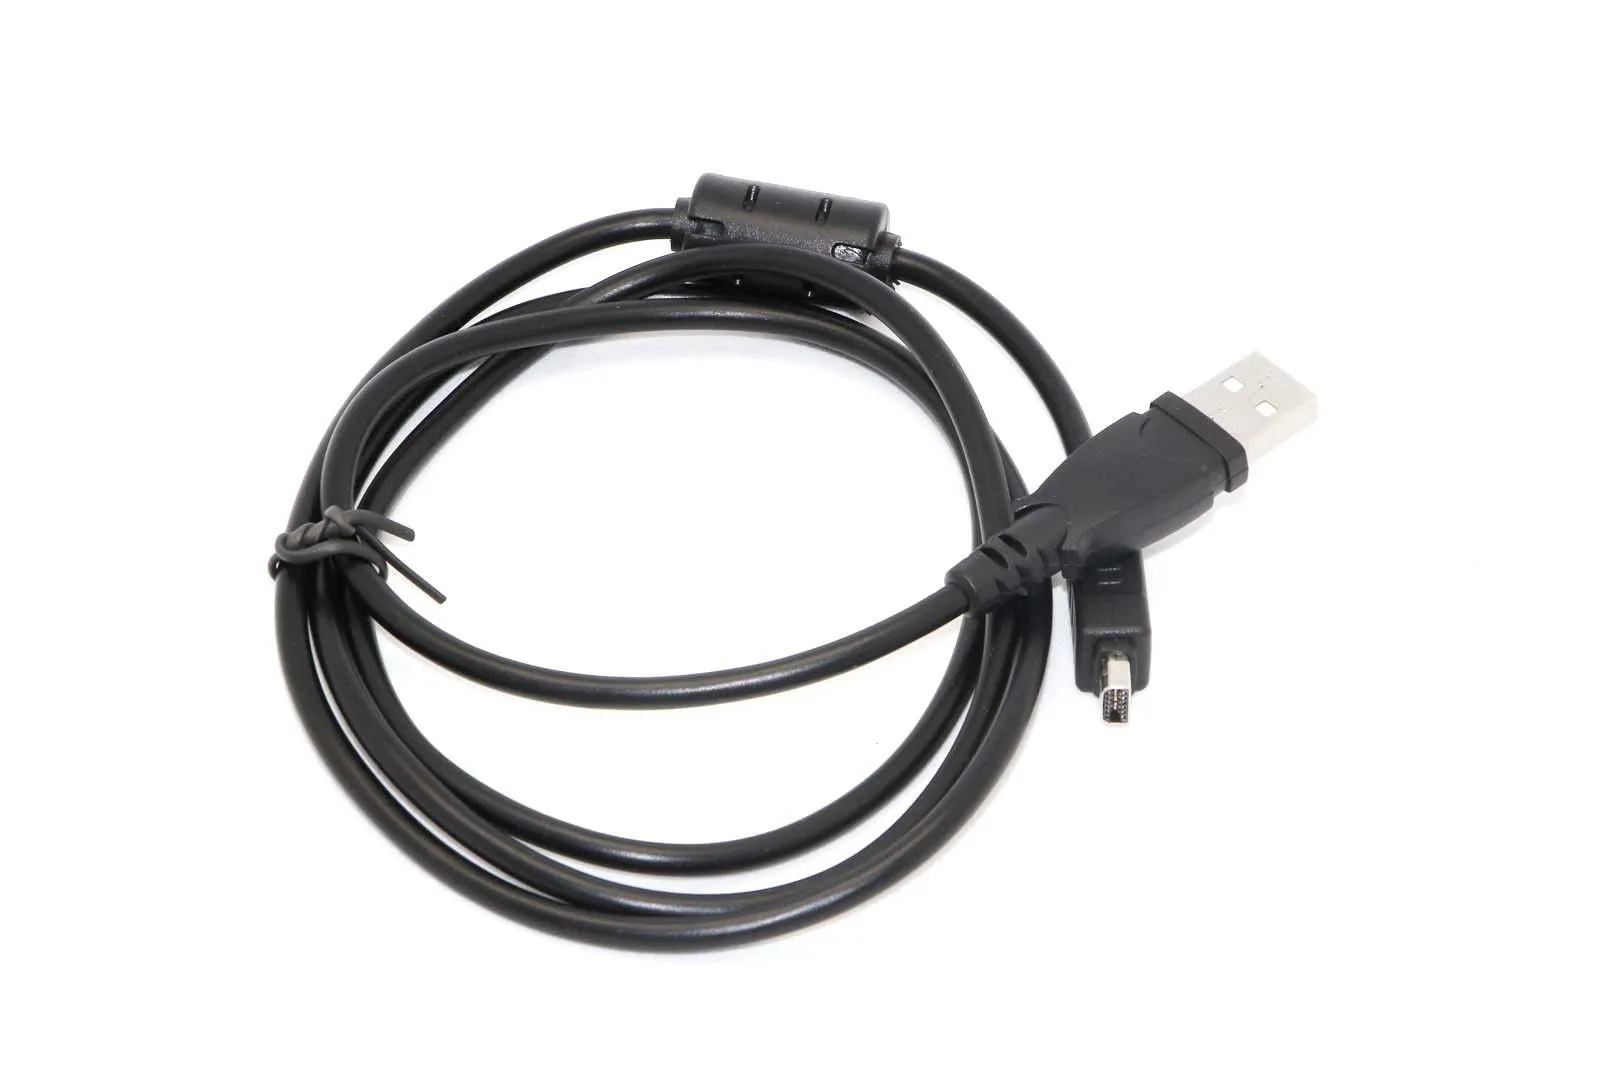 Cable de sincronización de datos del cargador de batería USB para cámara Olympus Stylus TG-2 iHS TG-3